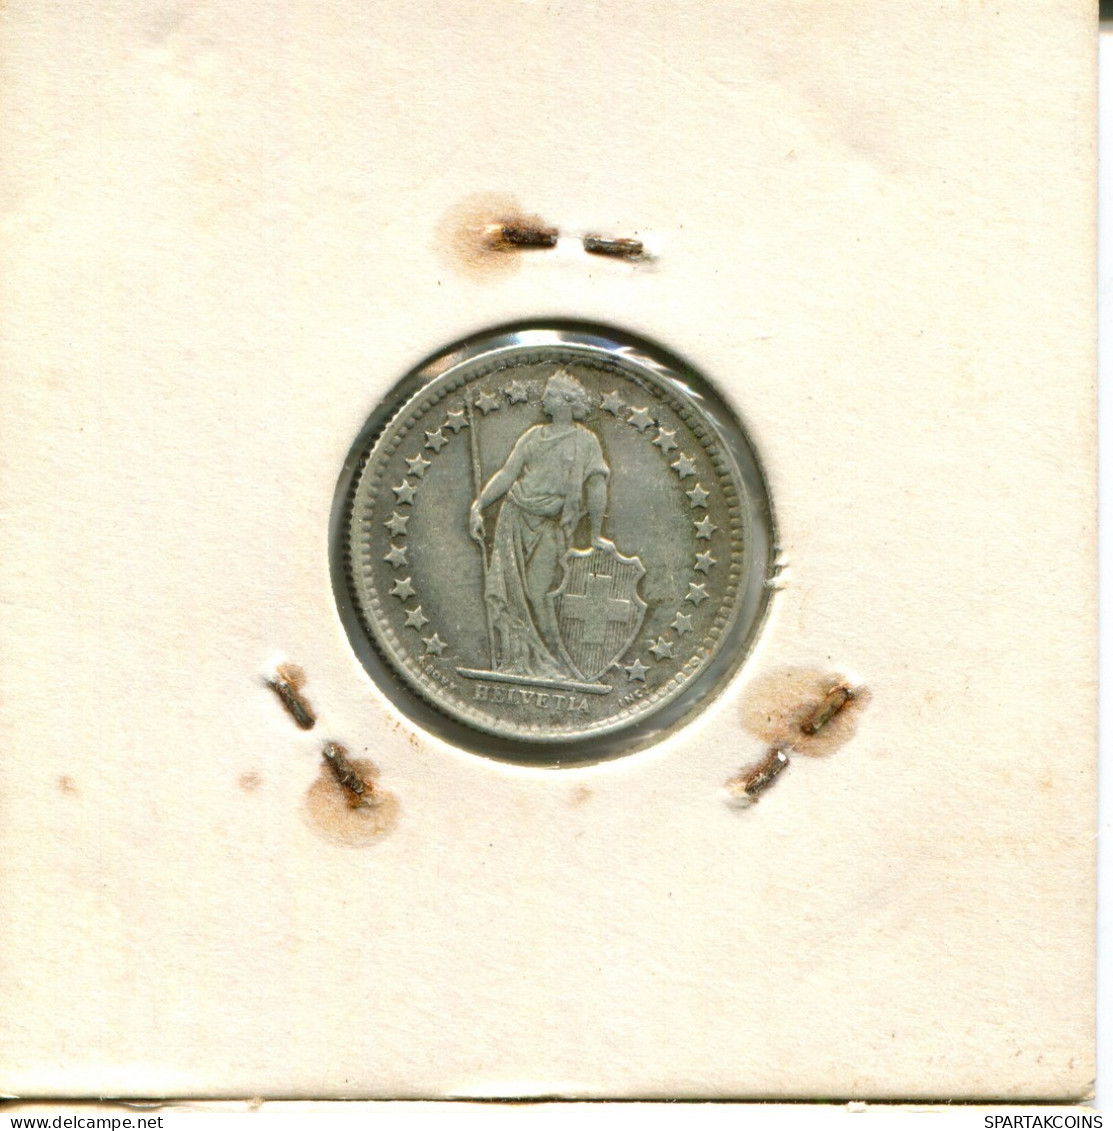 1/2 FRANC 1960 B SUIZA SWITZERLAND Moneda PLATA #AY019.3.E.A - Autres & Non Classés